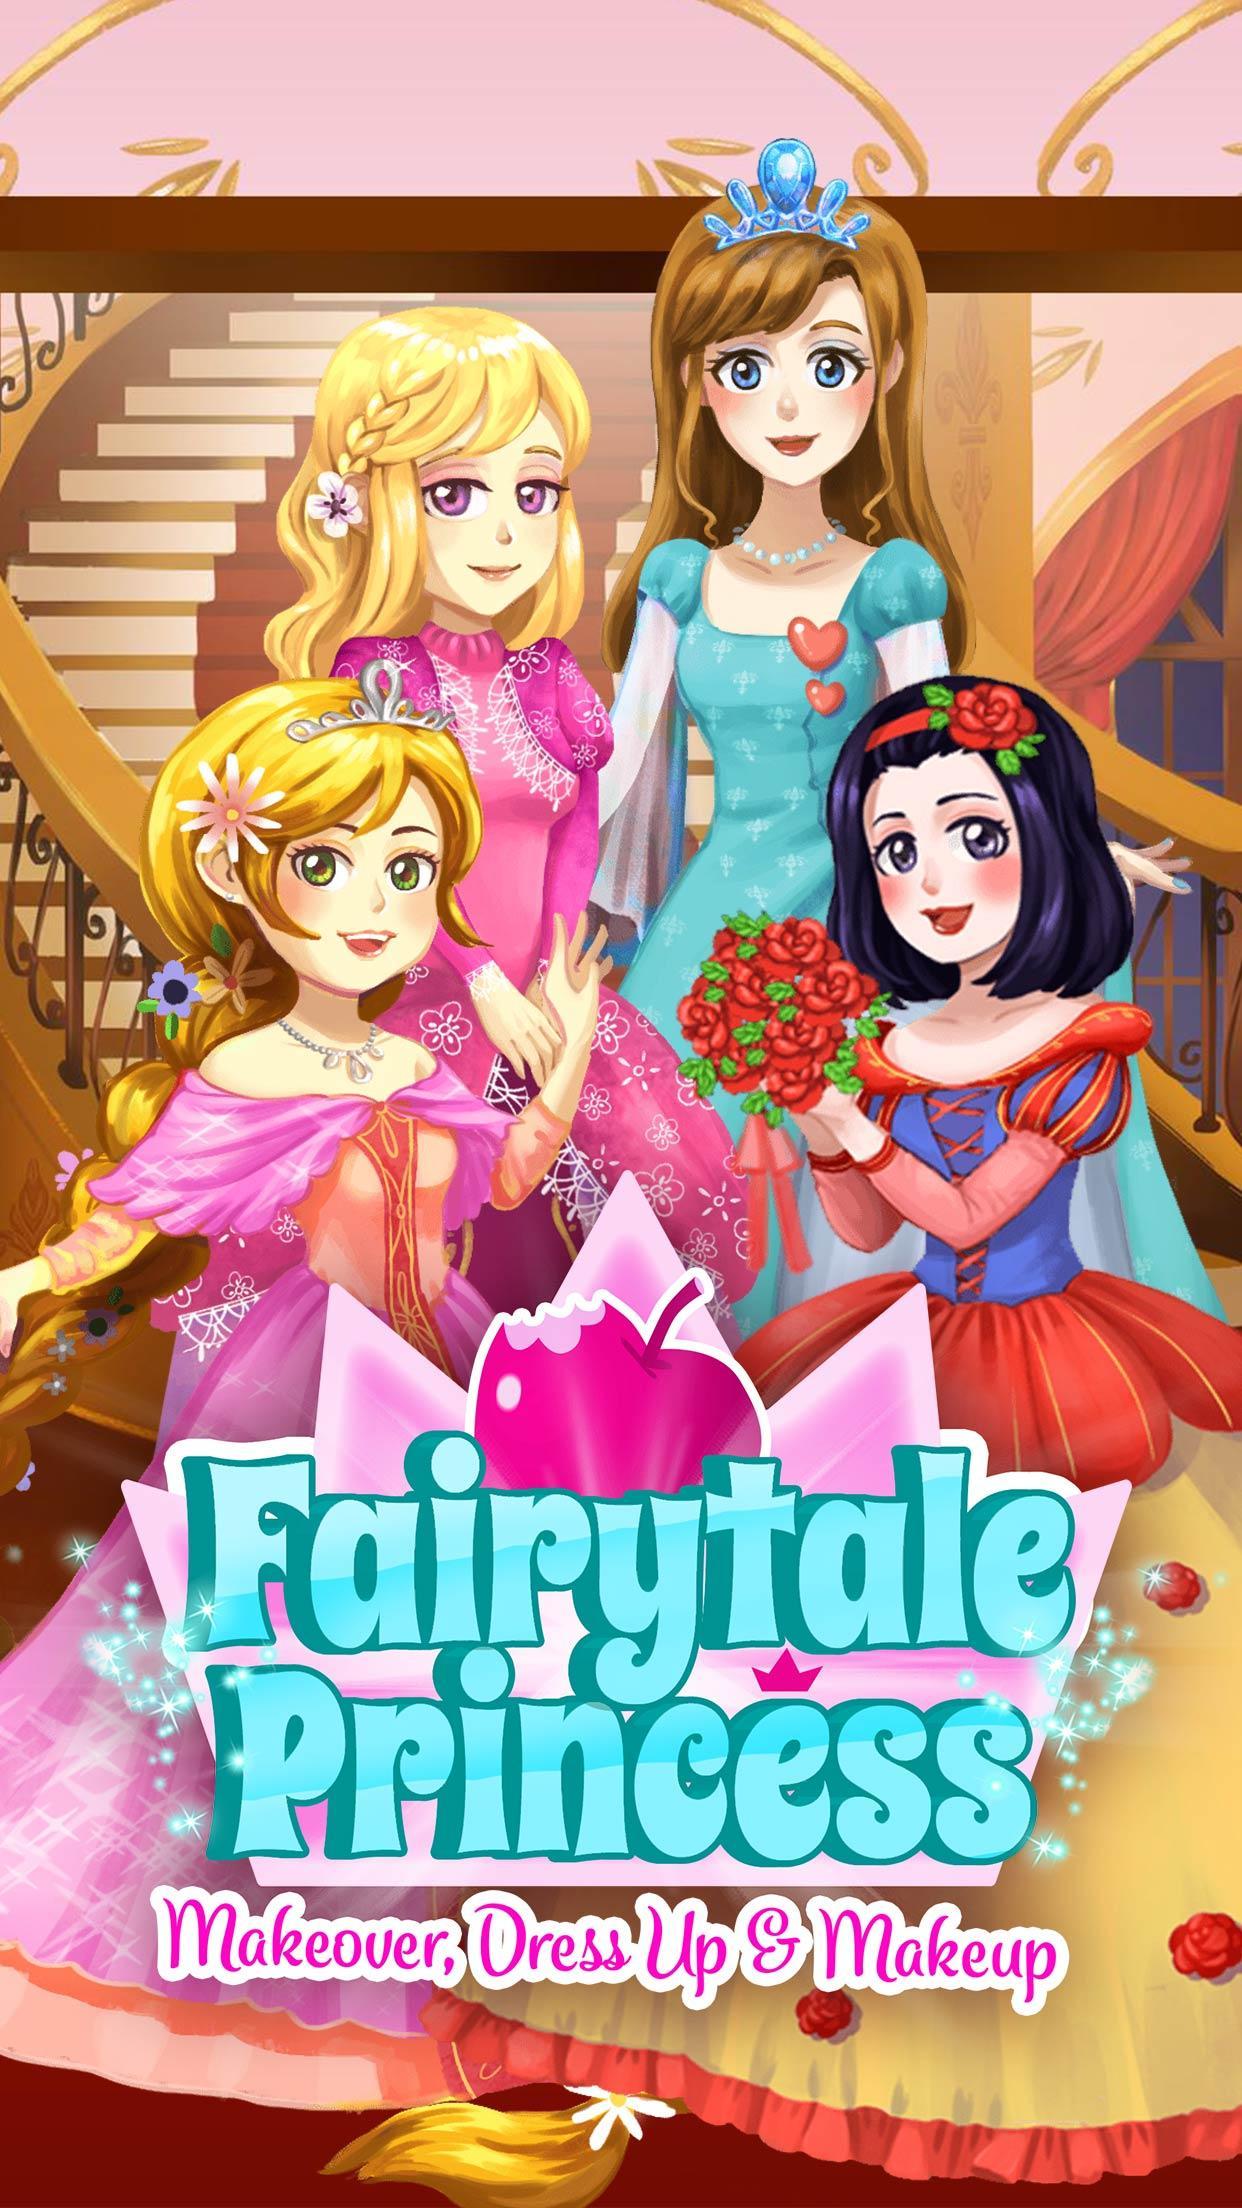 Screenshot 1 of Fairytale Princess - Makeover, Dress Up at Makeup 1.0.13